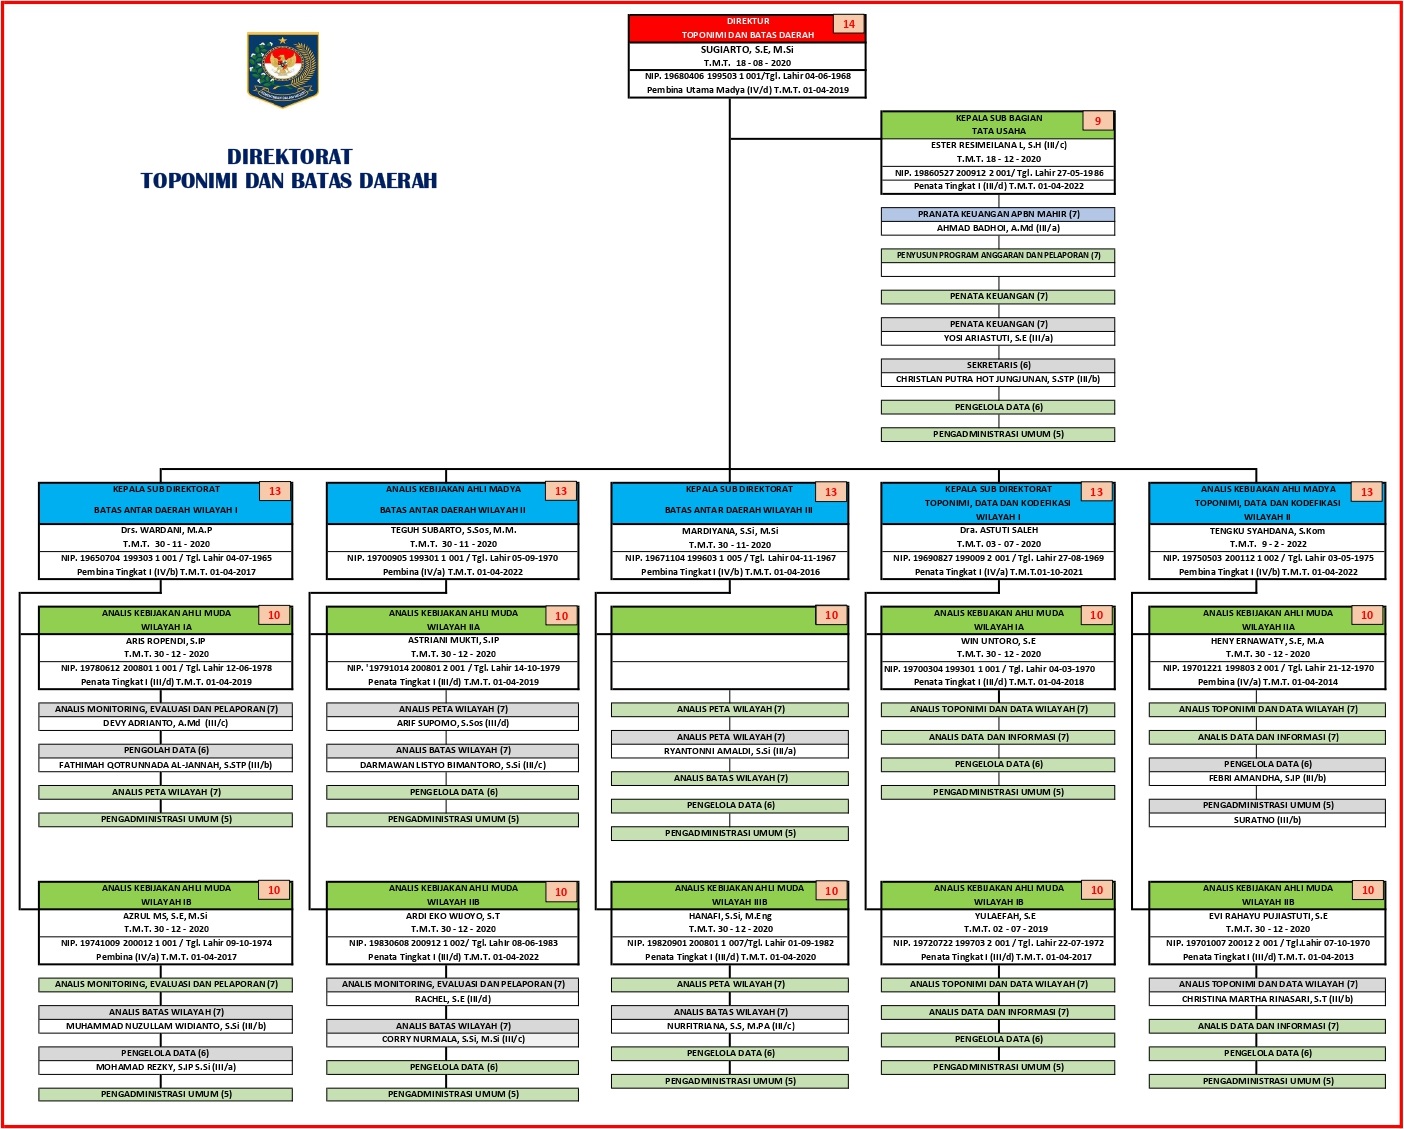 Struktur Organisasi Direktorat Toponimoi dan Batas Daerah Ditjen Bina Adwil